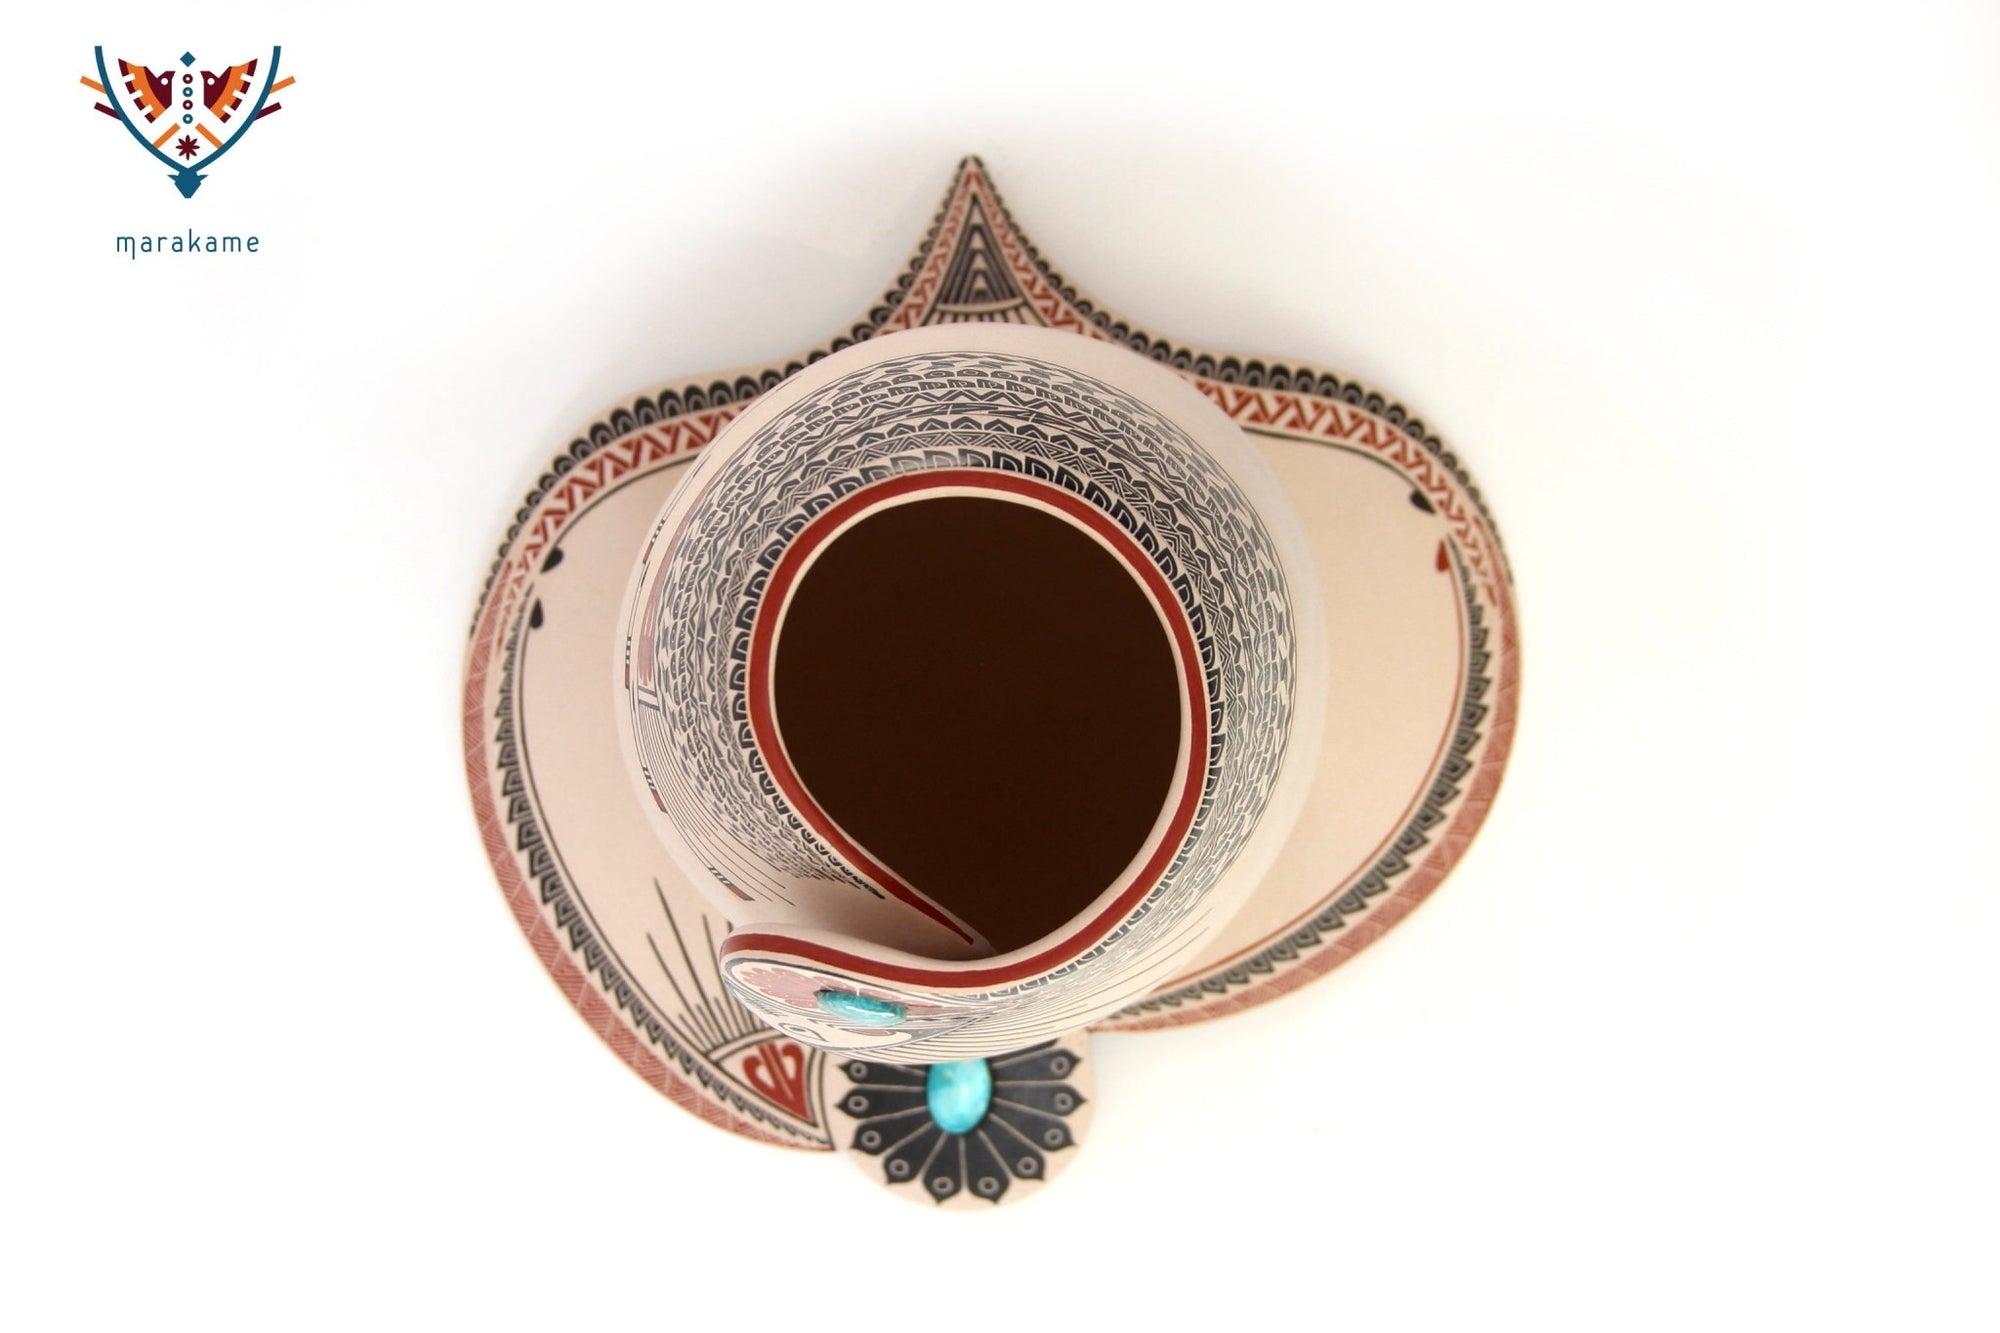 Céramique Mata Ortiz - Turquoises - Art Huichol - Marakame